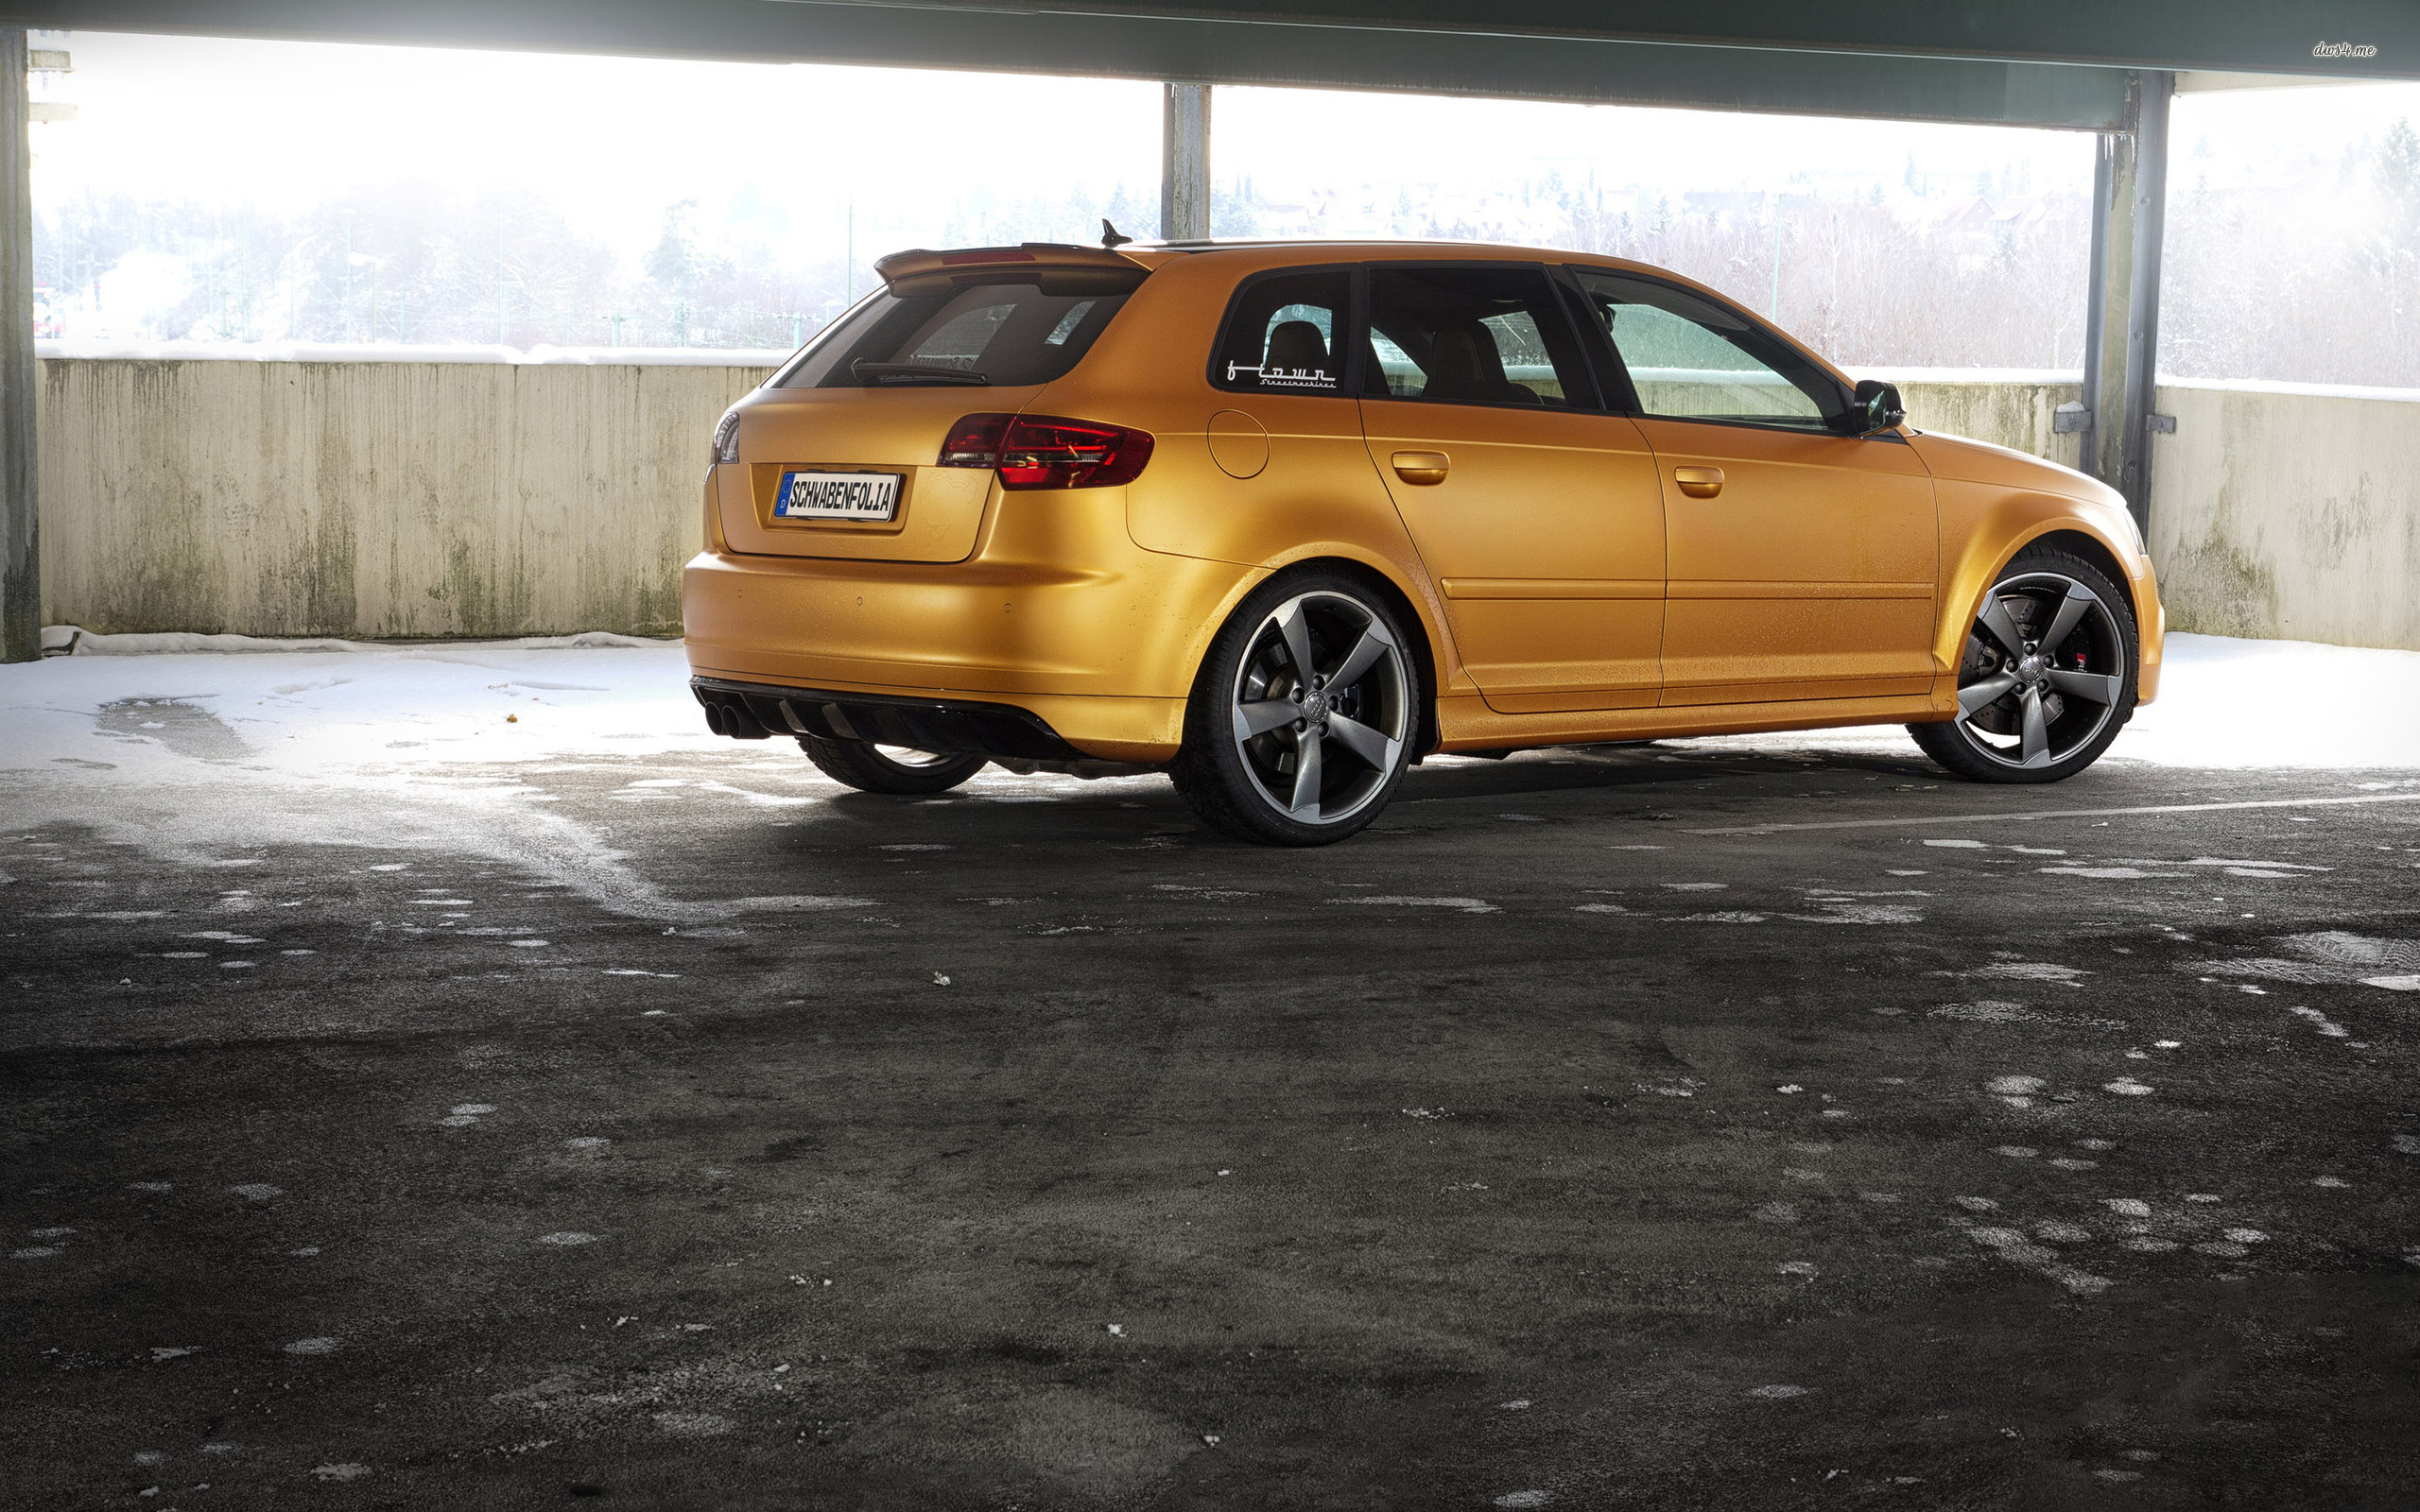 Audi A3 Sportback Gold - HD Wallpaper 